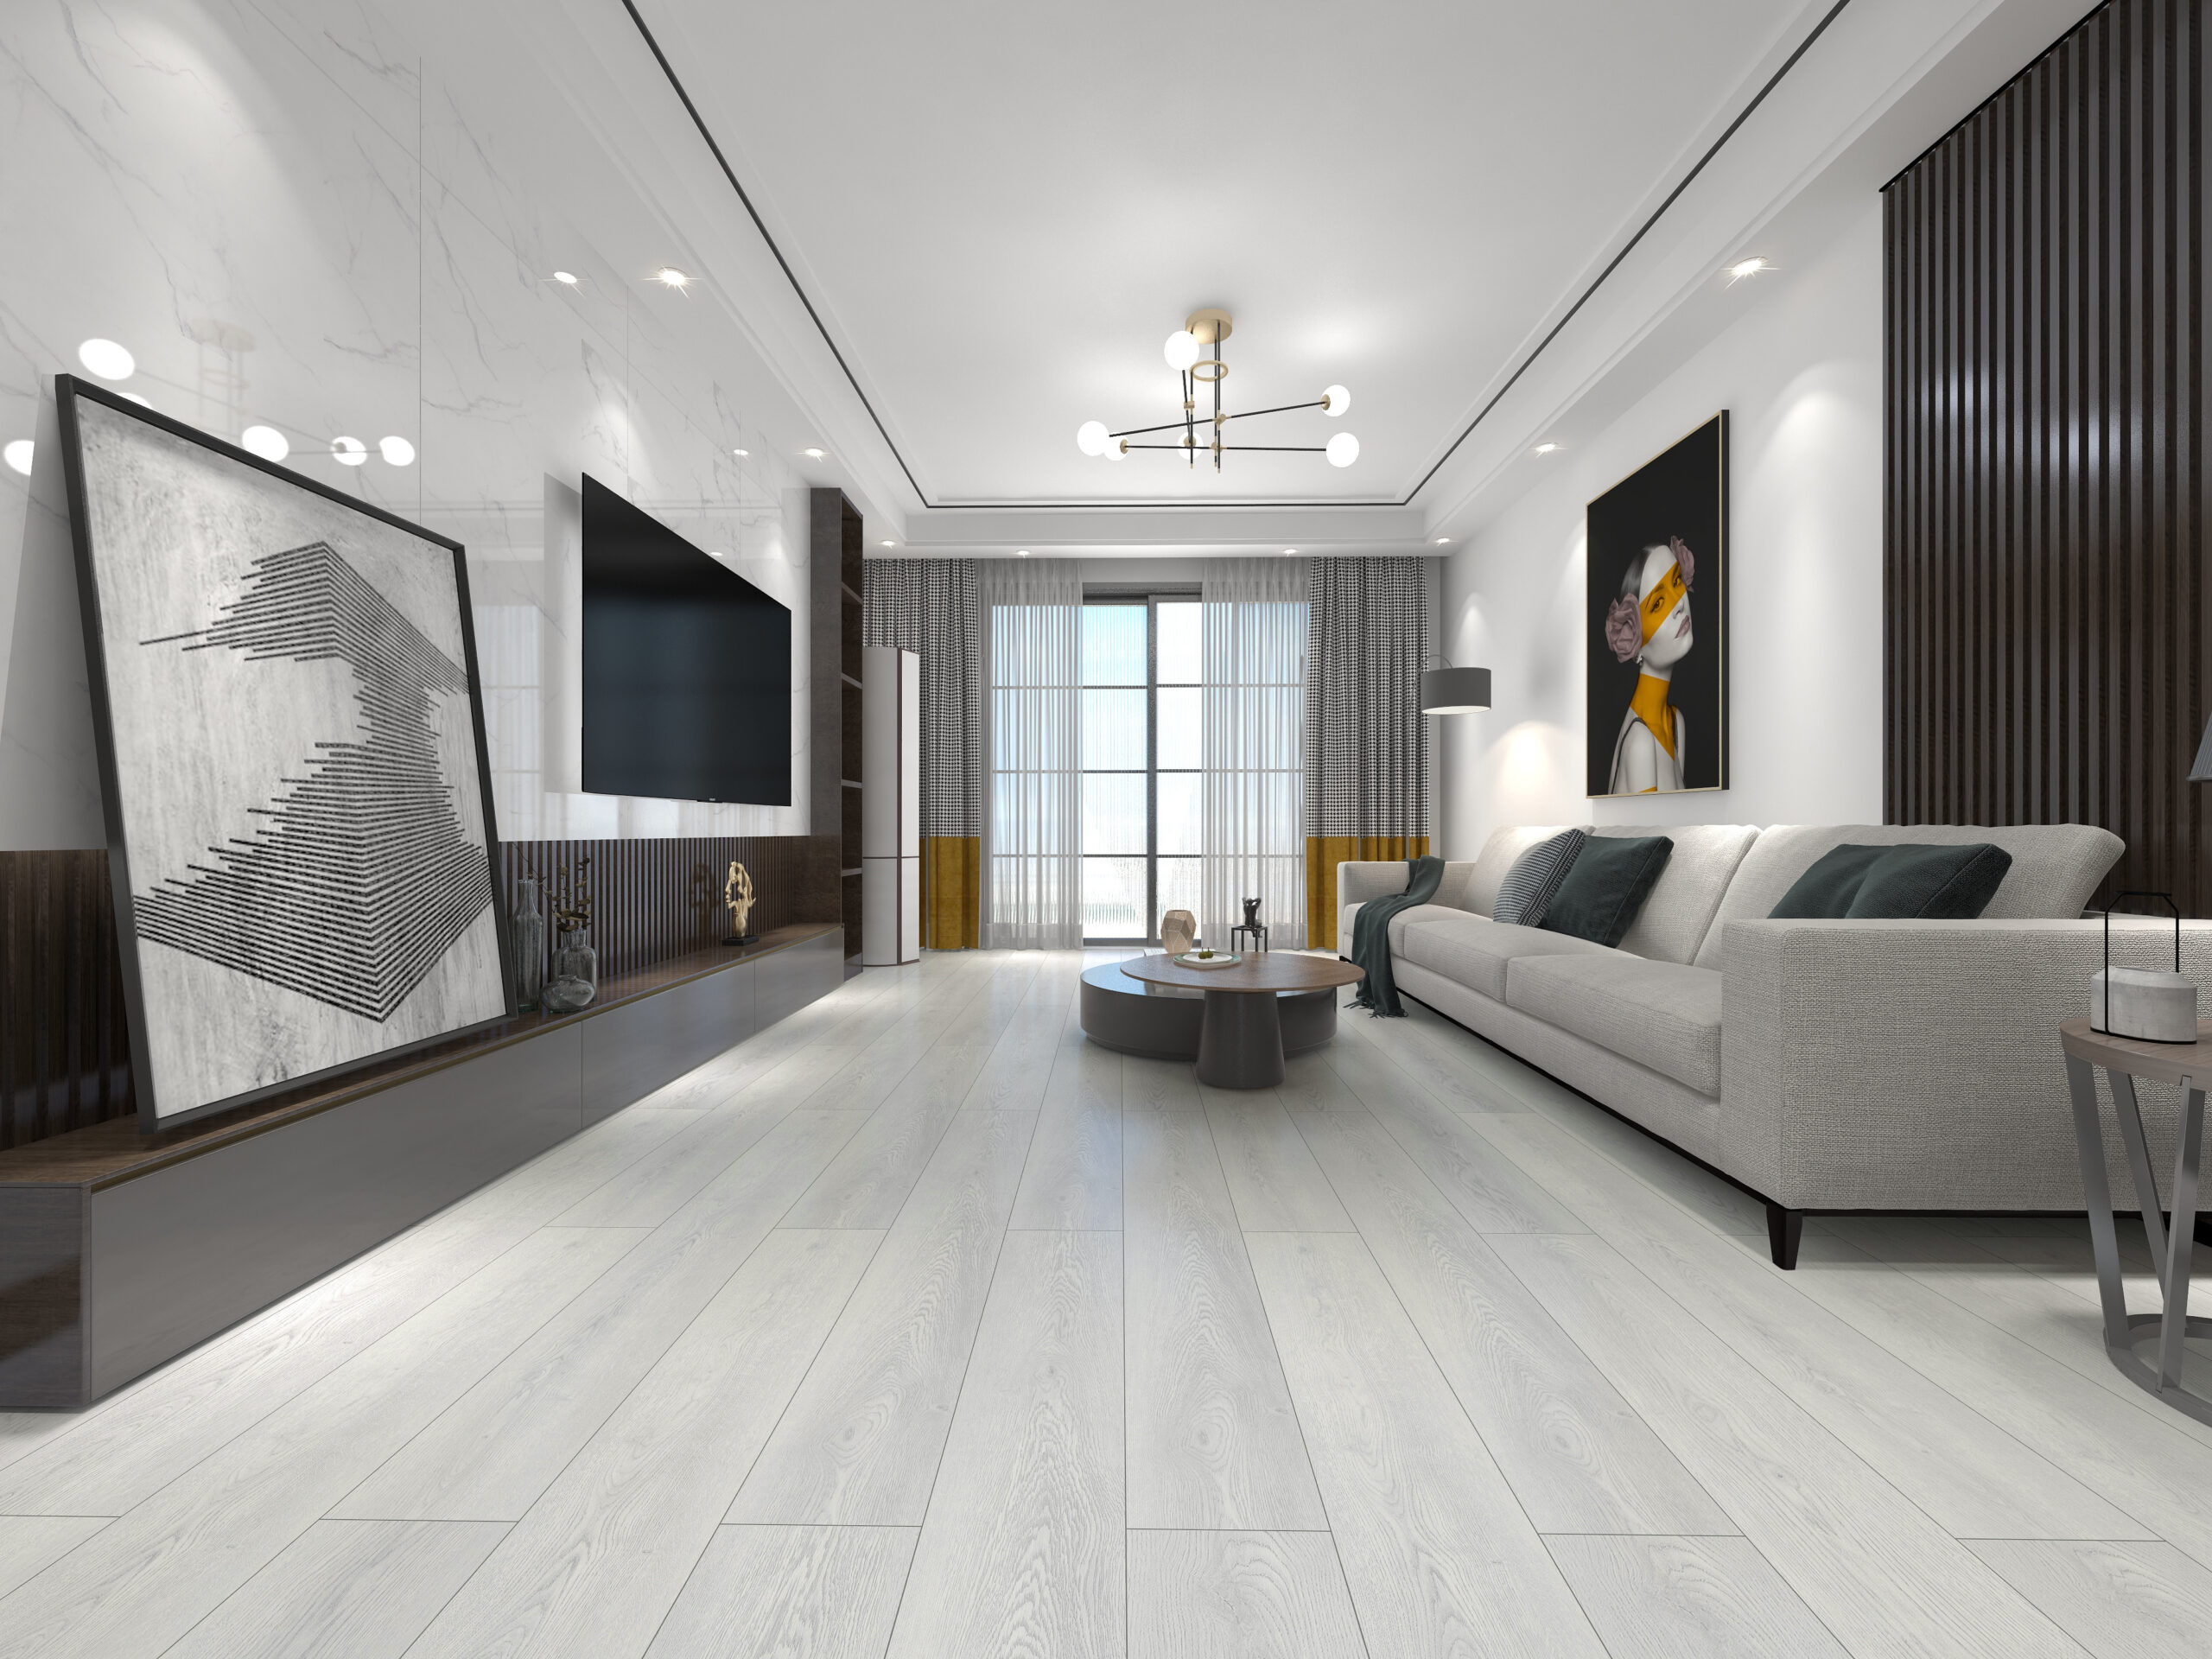 Still Loving Our Basement LVP  in 2023  Luxury vinyl plank flooring,  Living room remodel, Living room flooring